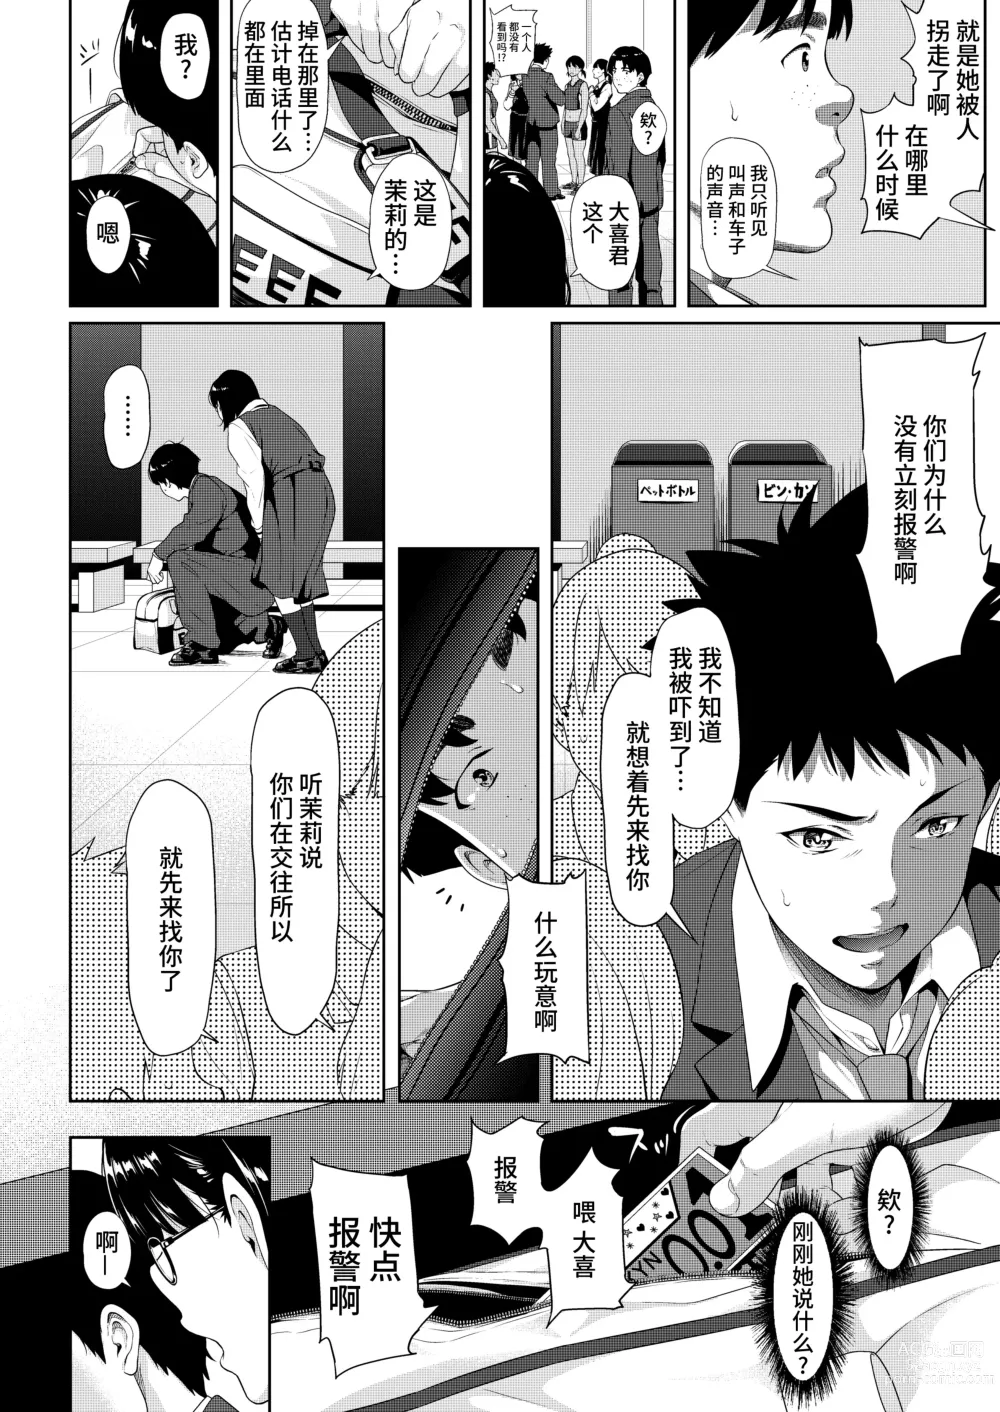 Page 8 of manga Bokutachi no Goal Line